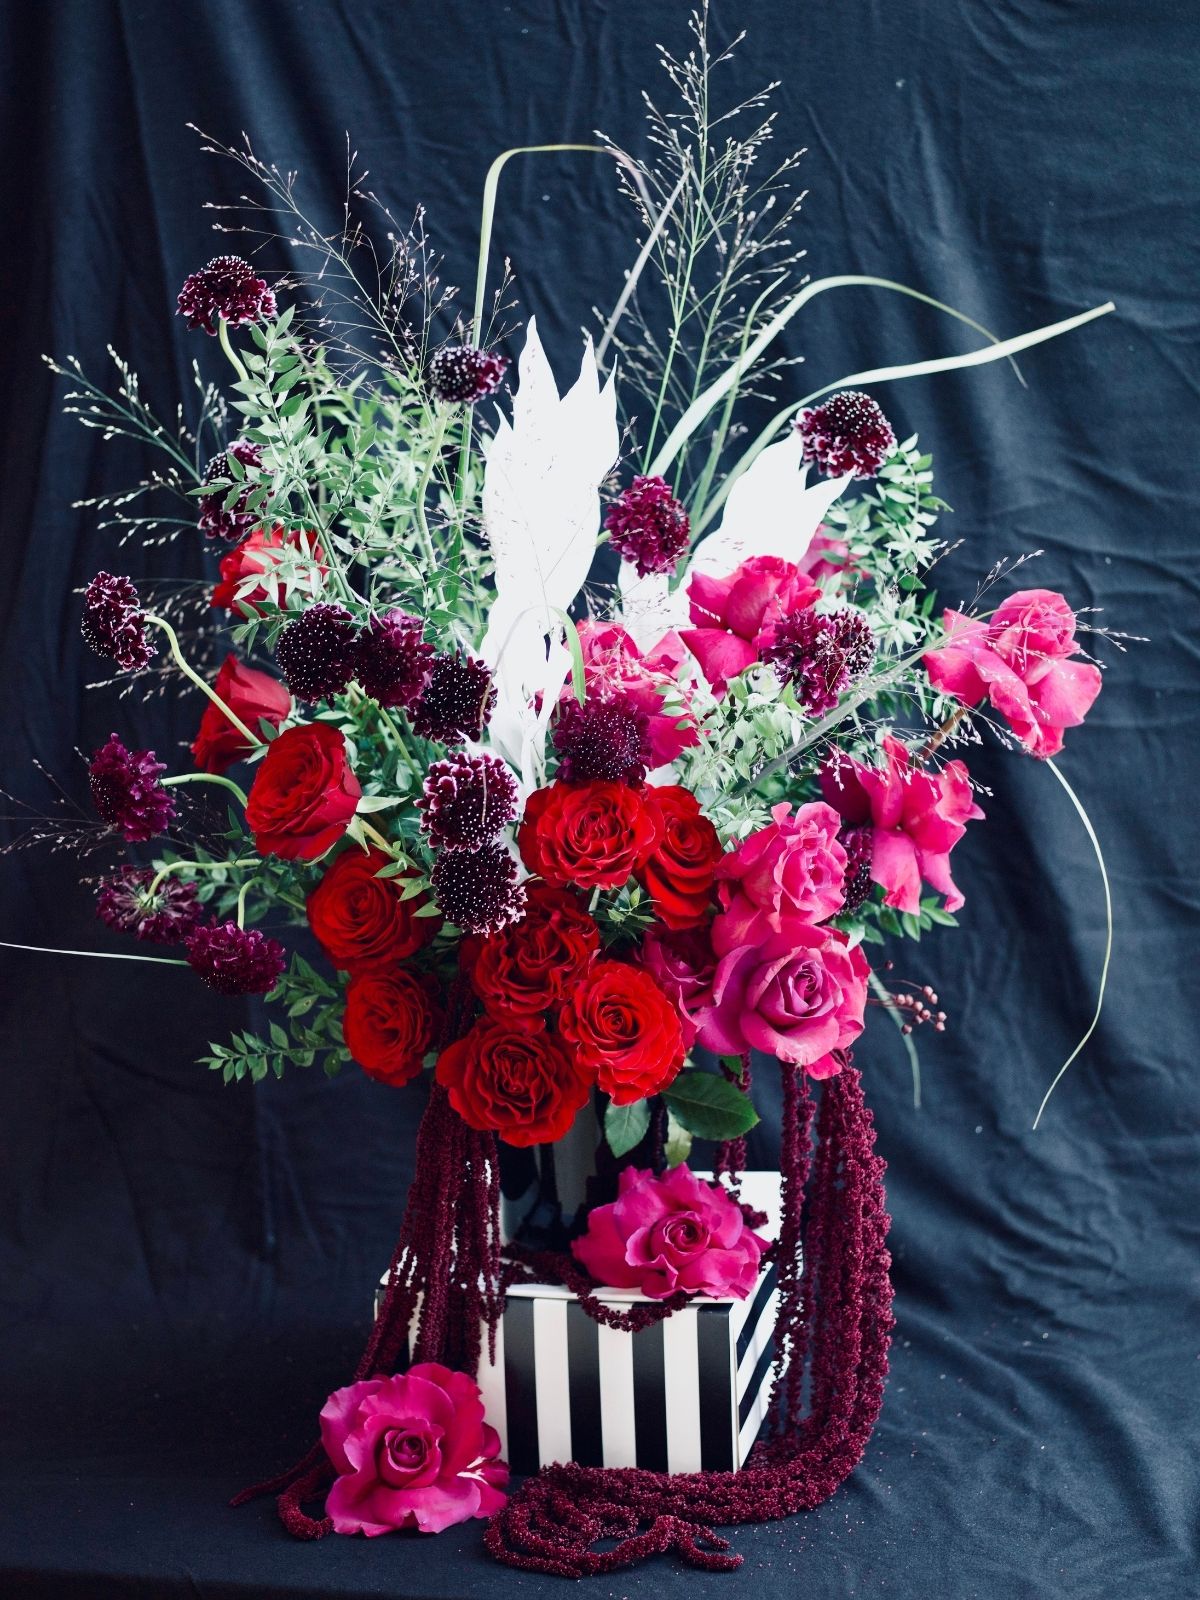 St. Valentine's Floral Design by Katya Hutter - on Thursd 